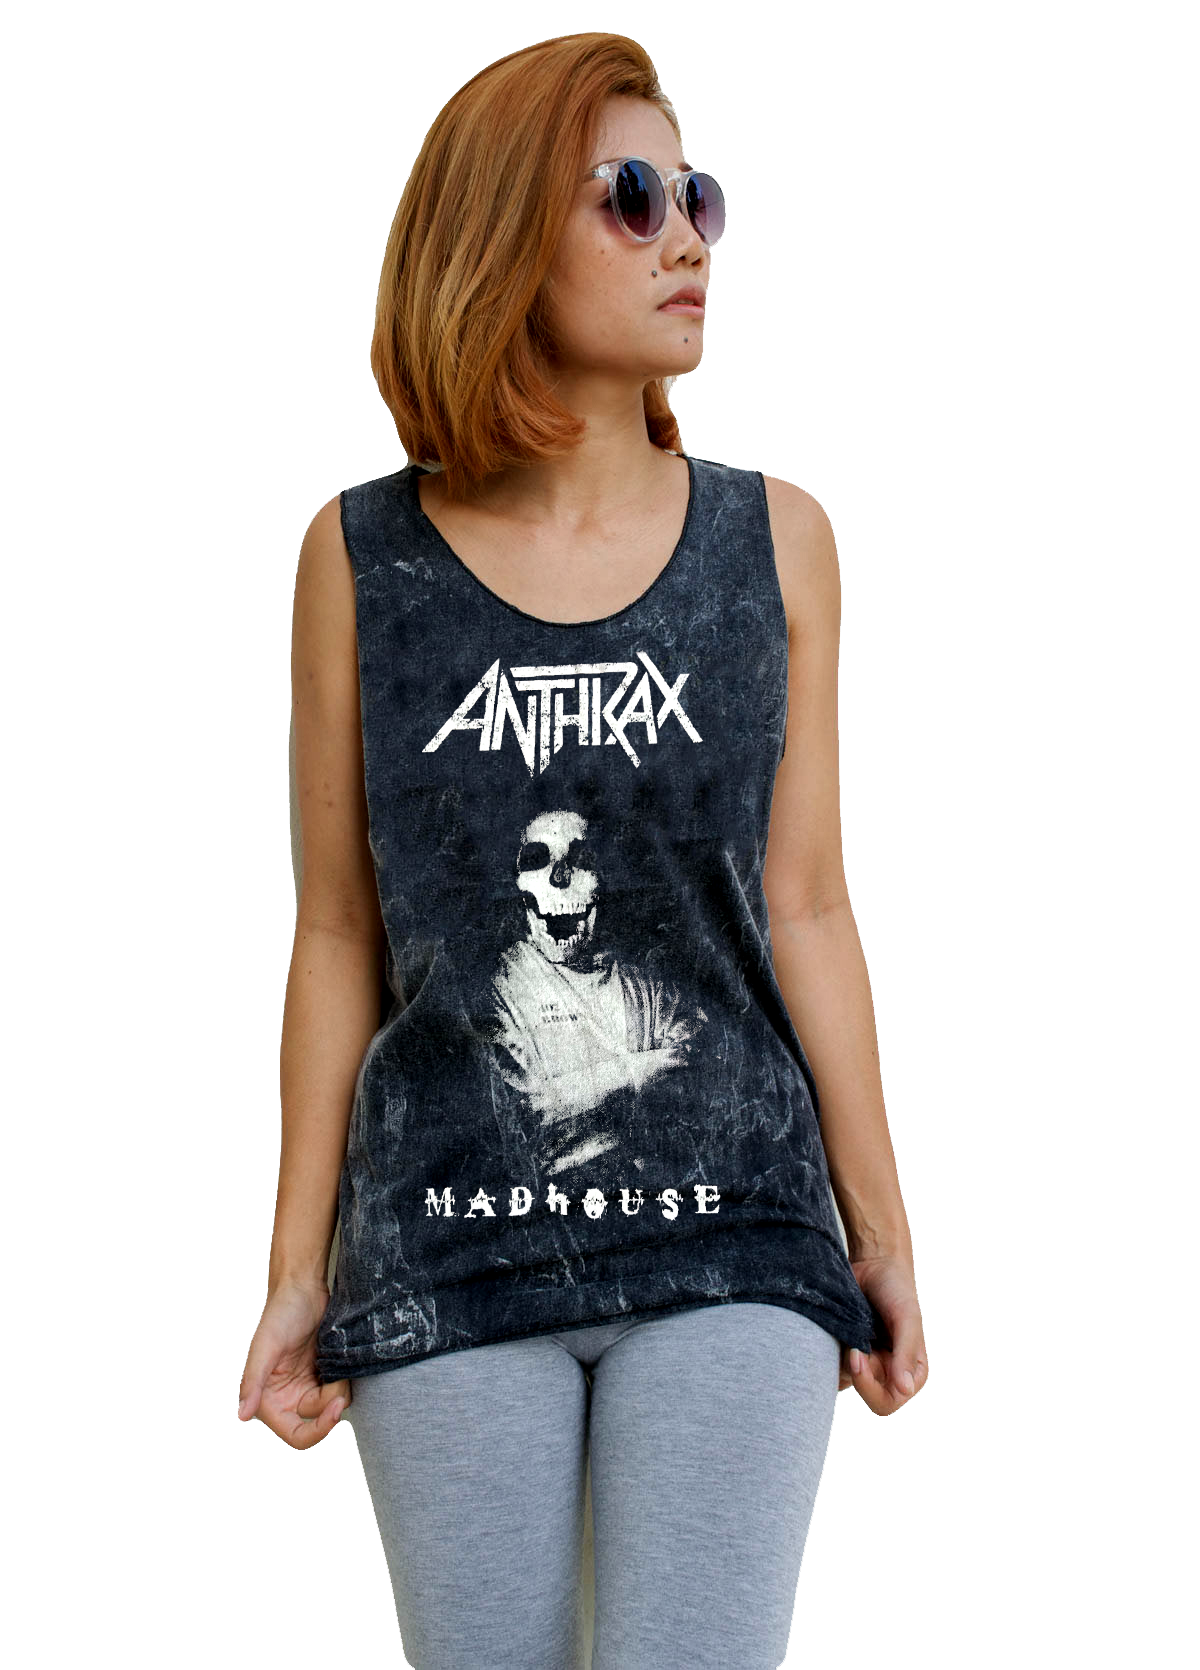 Unisex Anthrax Tank-Top Singlet vest Sleeveless T-shirt